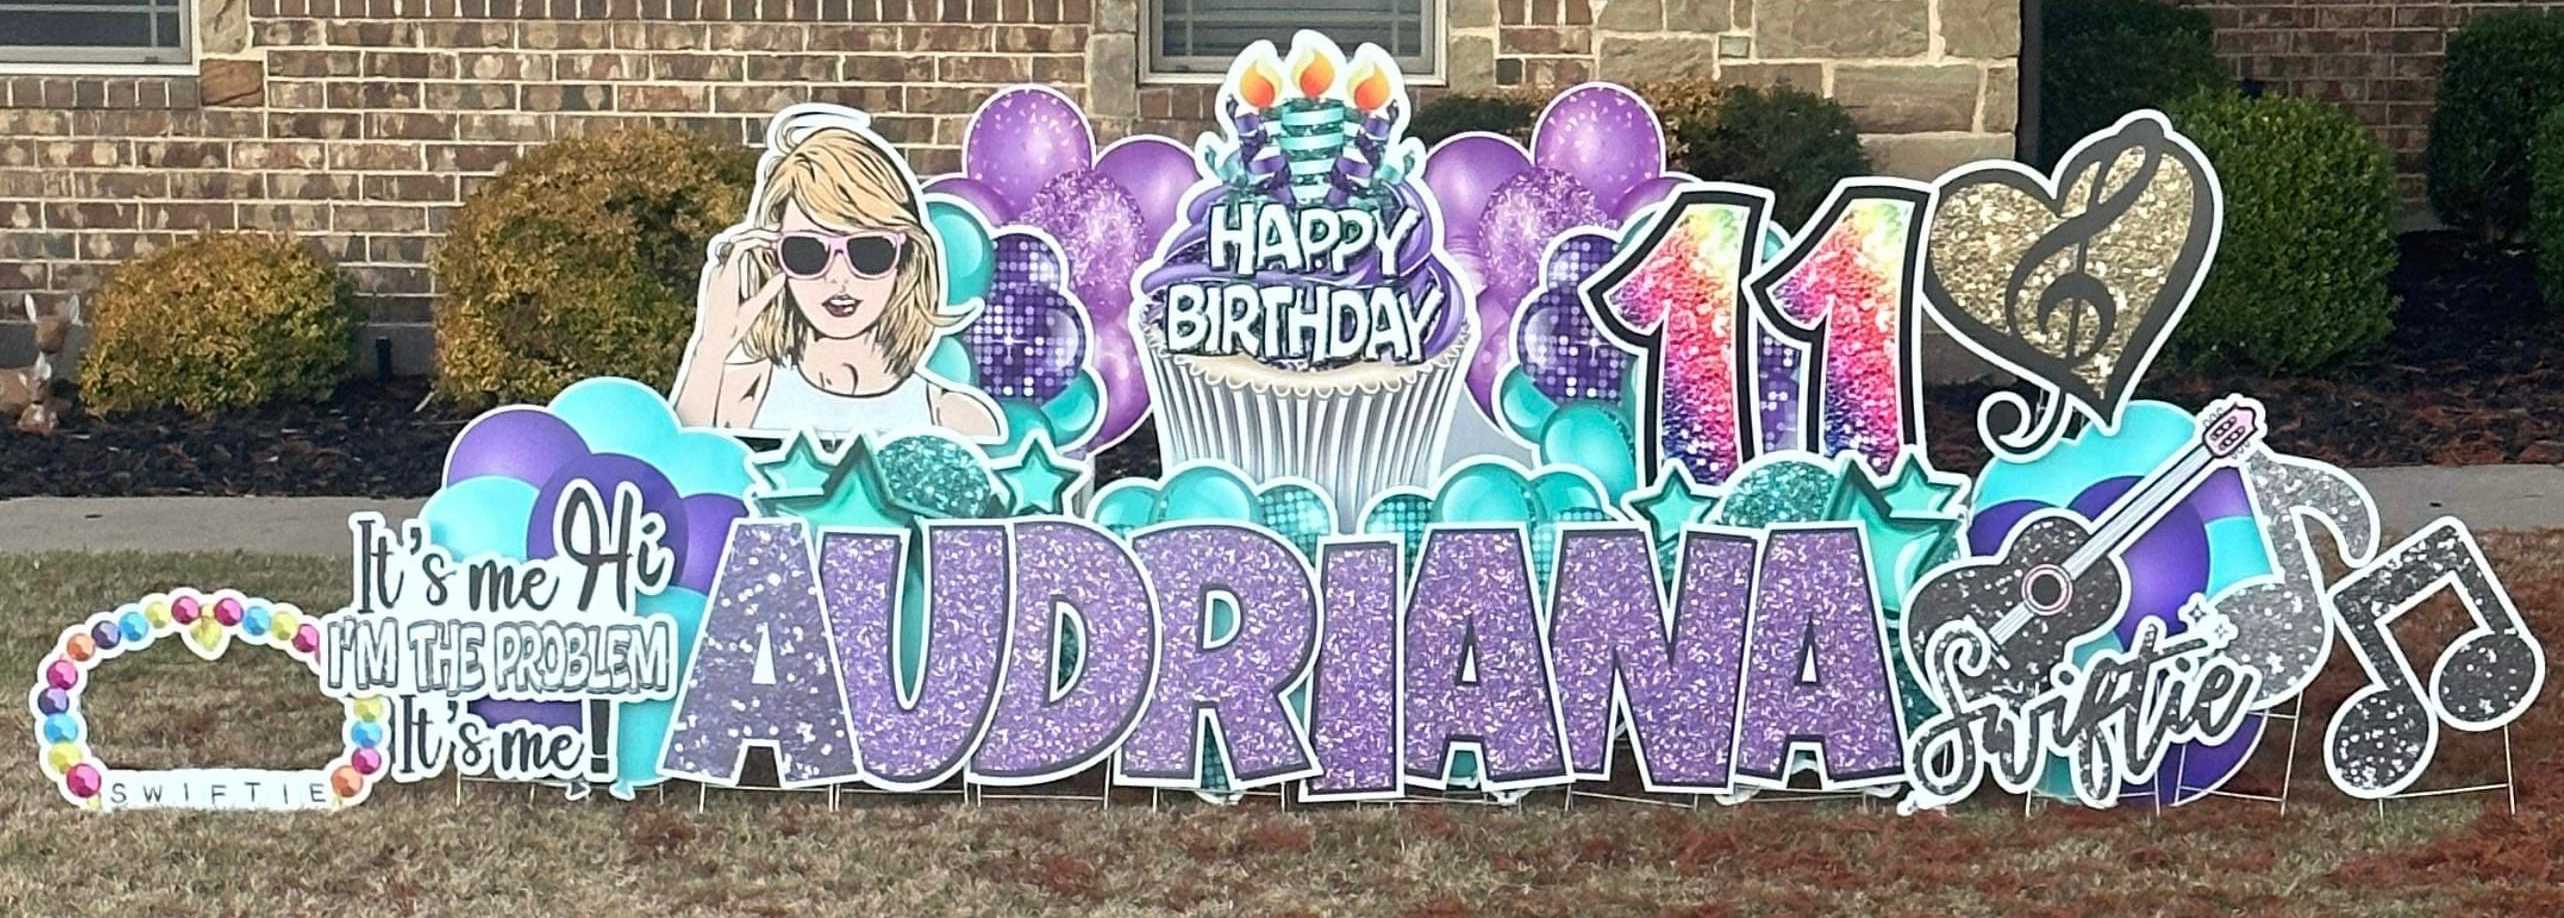 Yard card sign happy birthday audriana 